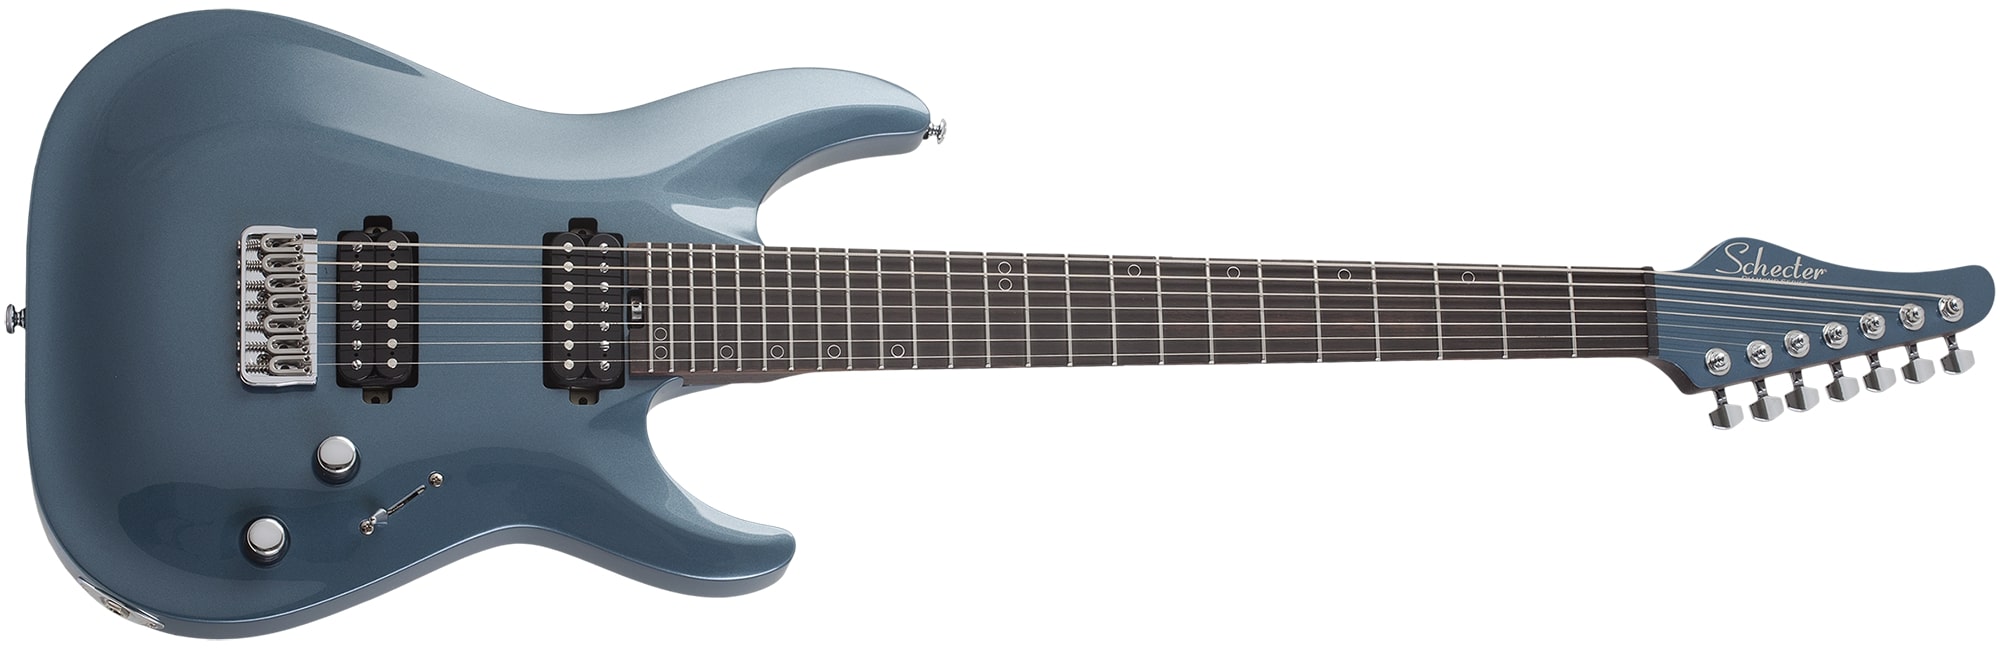 Schecter Aaron Marshall AM-7 7-String Electric Guitar, Cobalt Slate 2941-SHC